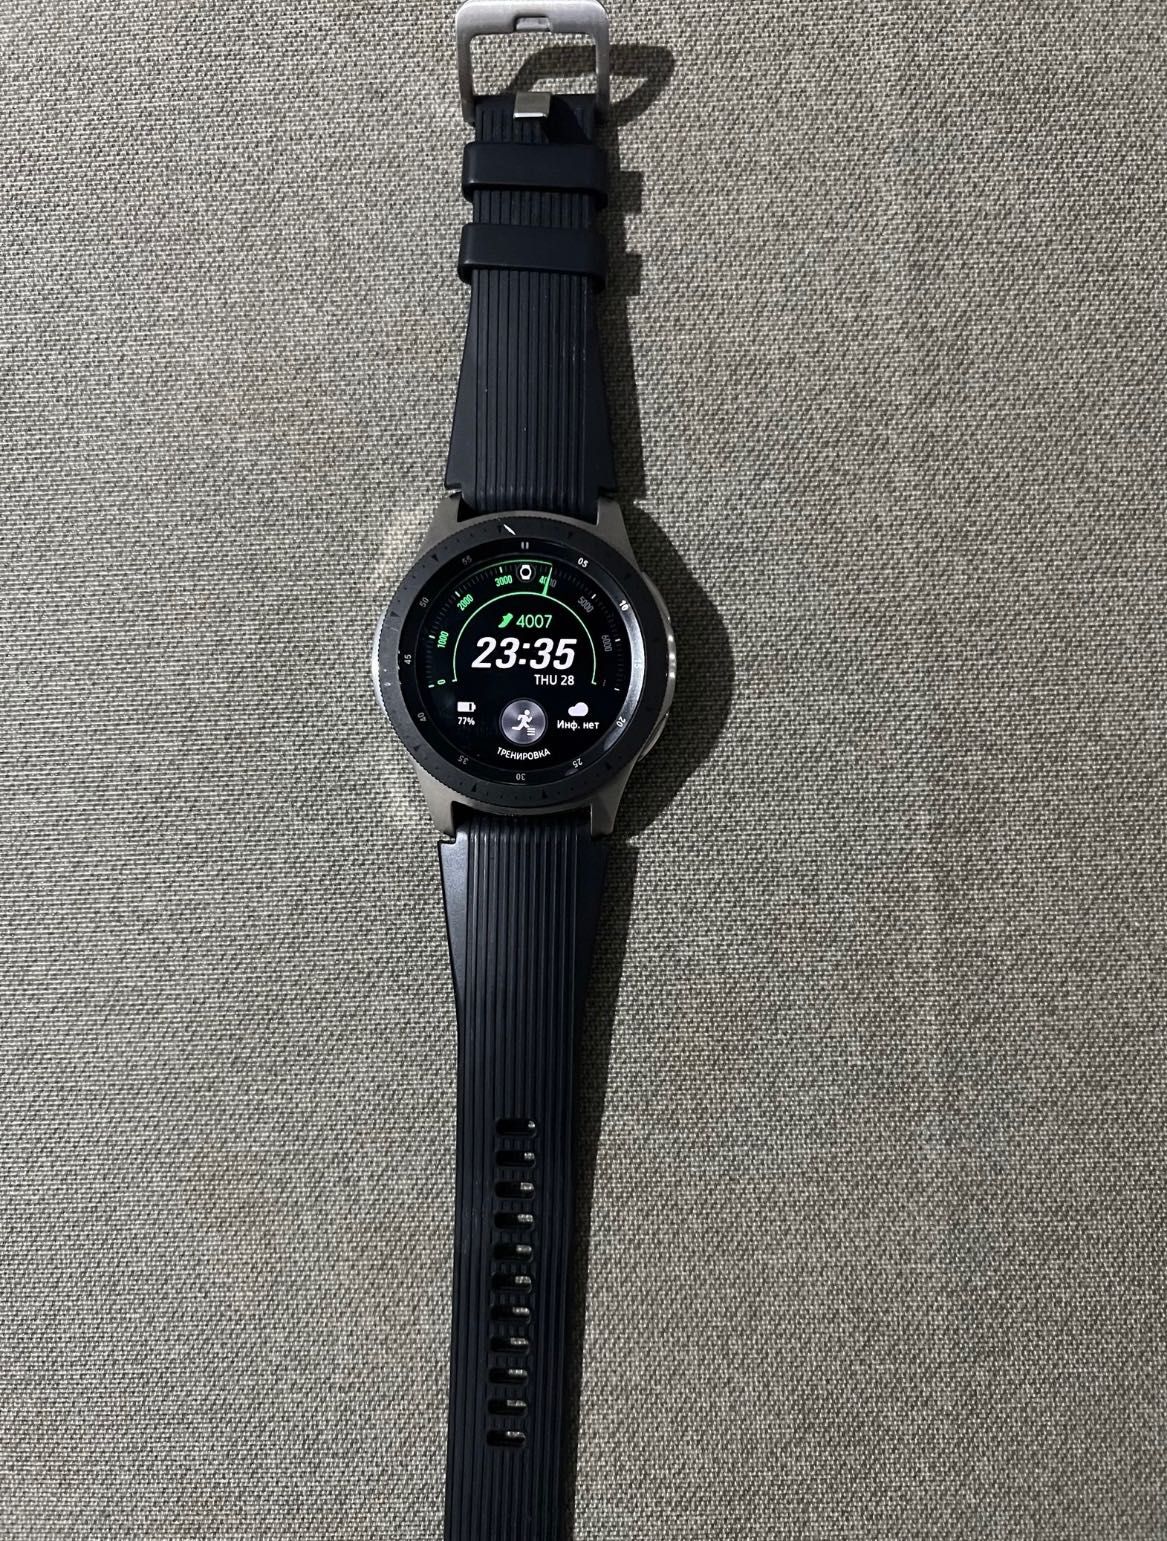 Часы Samsung Galaxy Watch